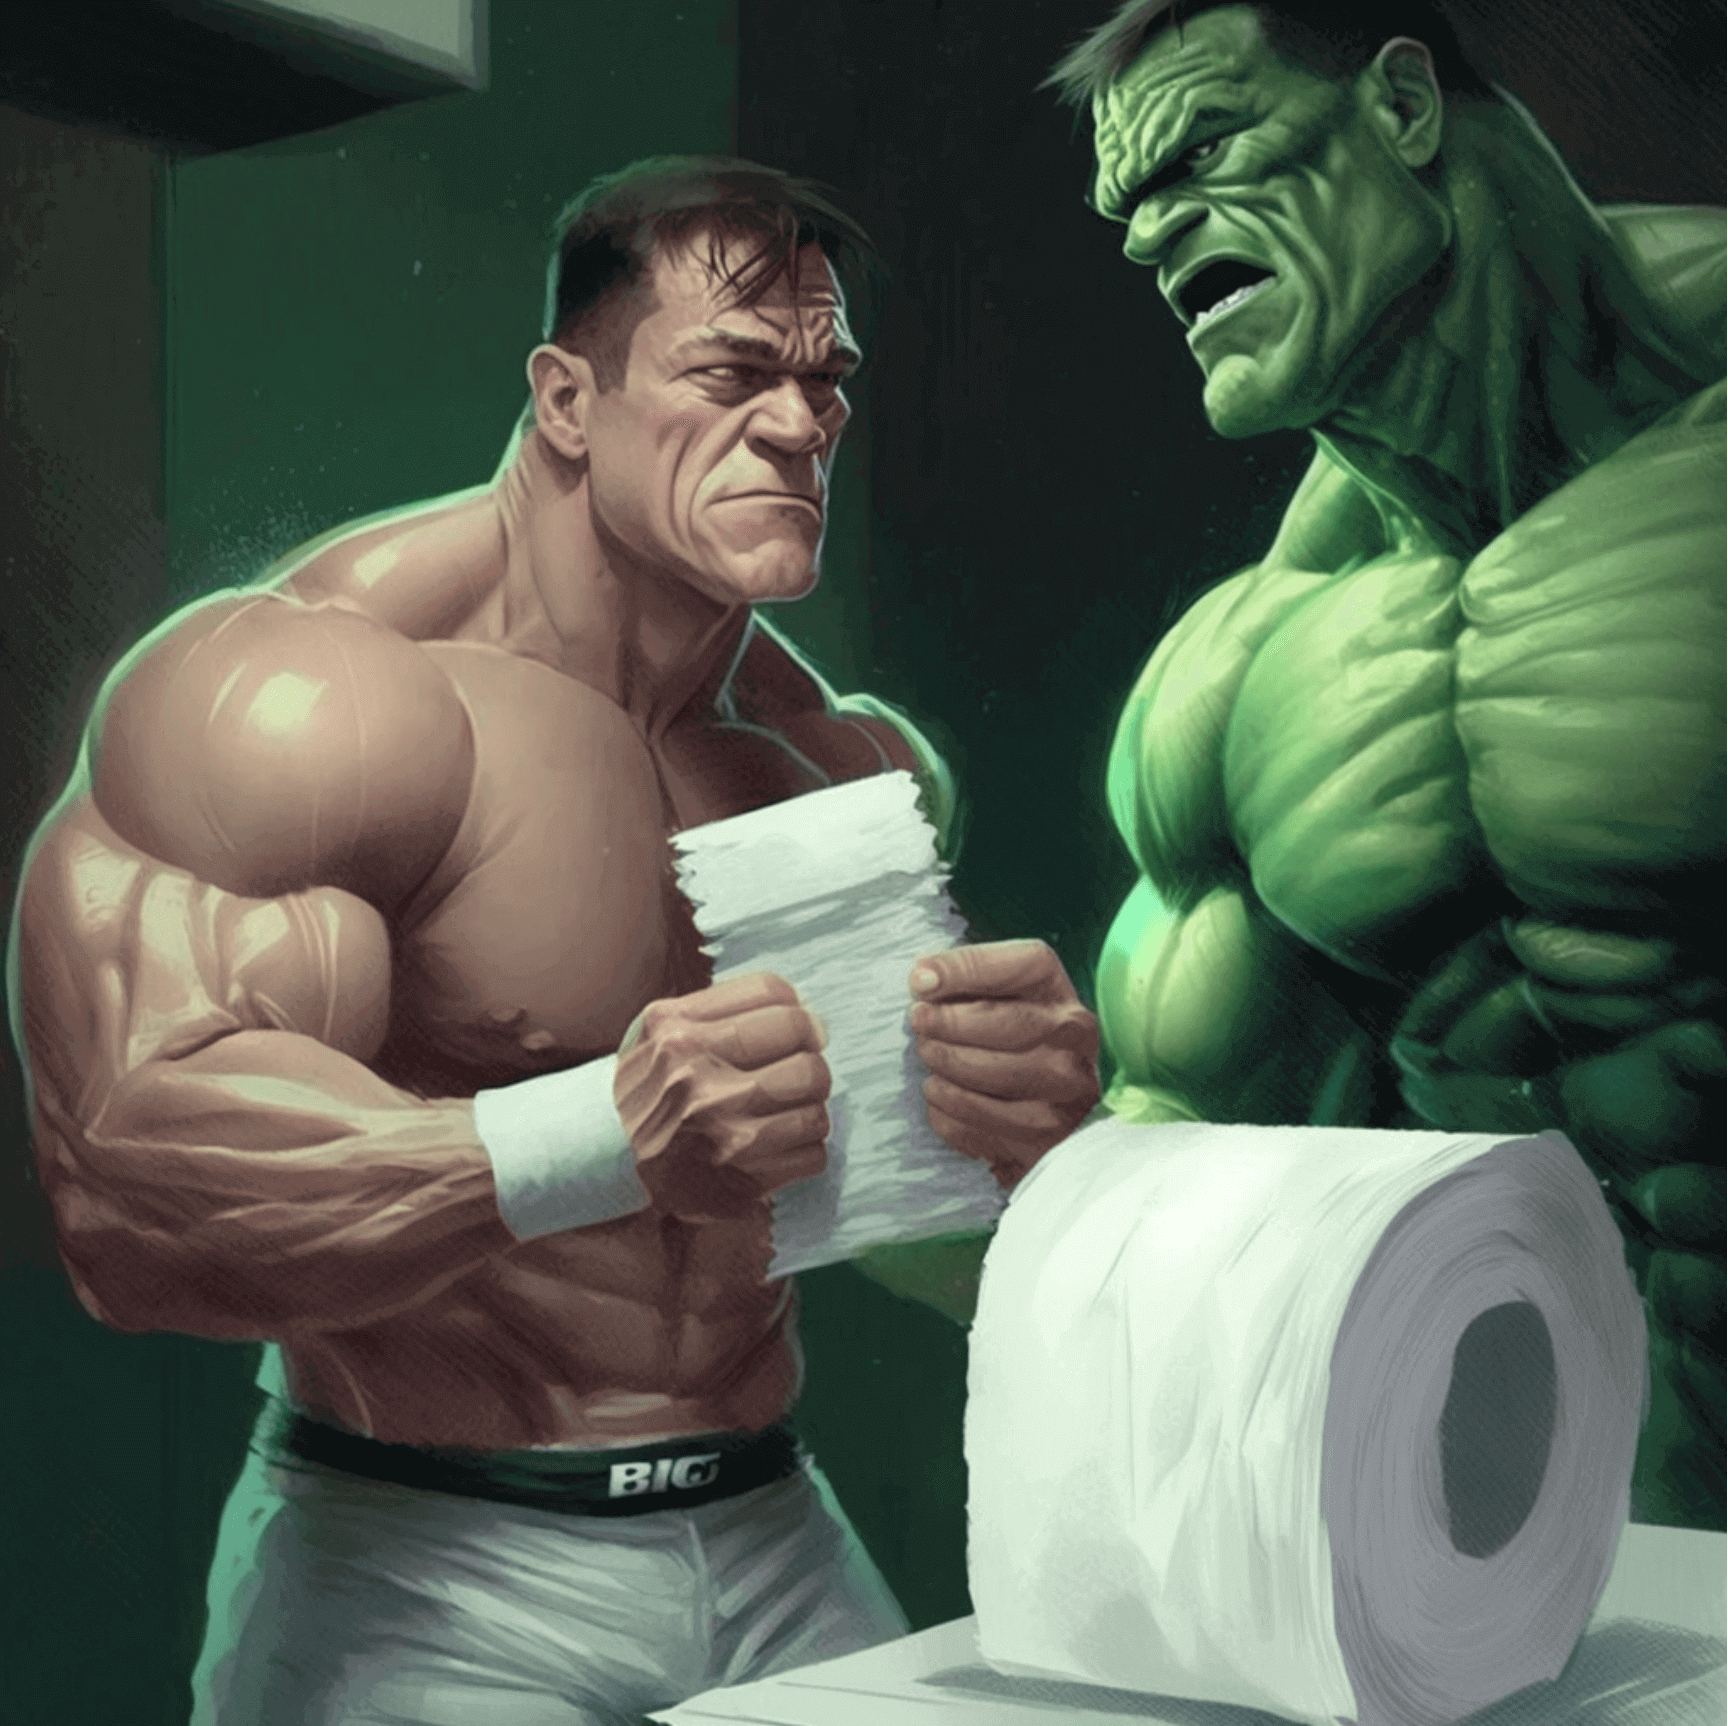 John Cena and the Incredible Hulk in the bathroom.